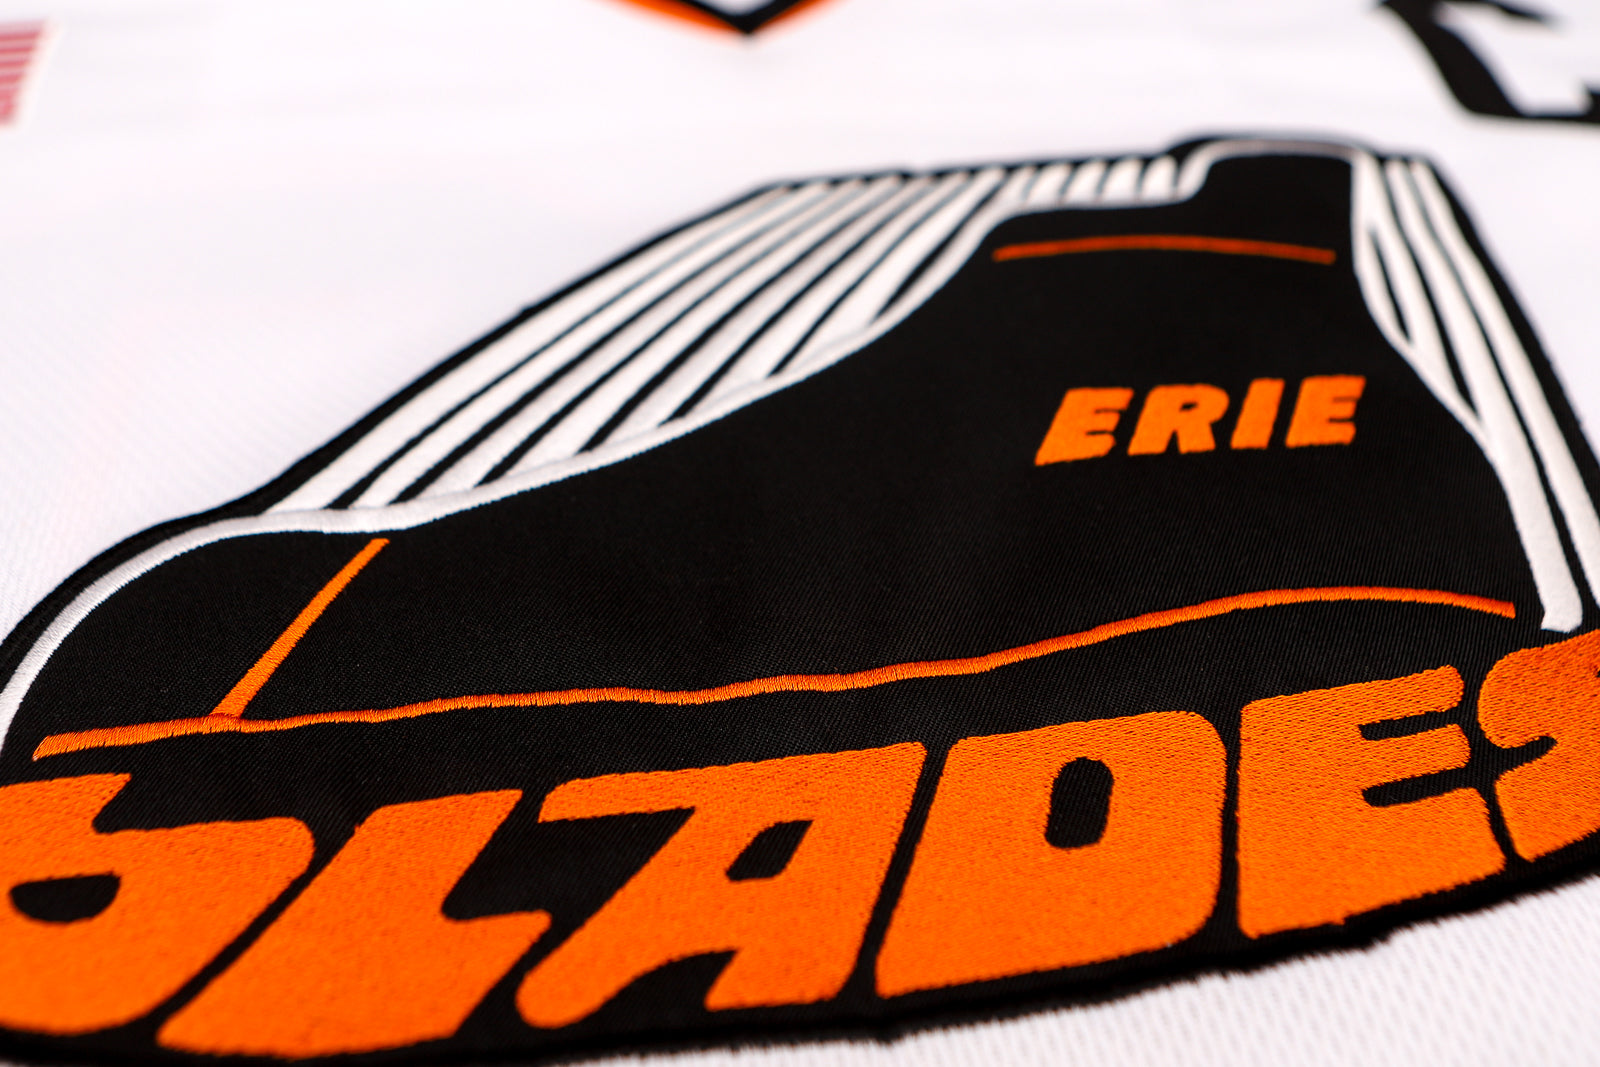  Custom Youth Philadelphia Flyers Hockey Jersey - Imprinted  (Small-Medium) Orange : Sports & Outdoors